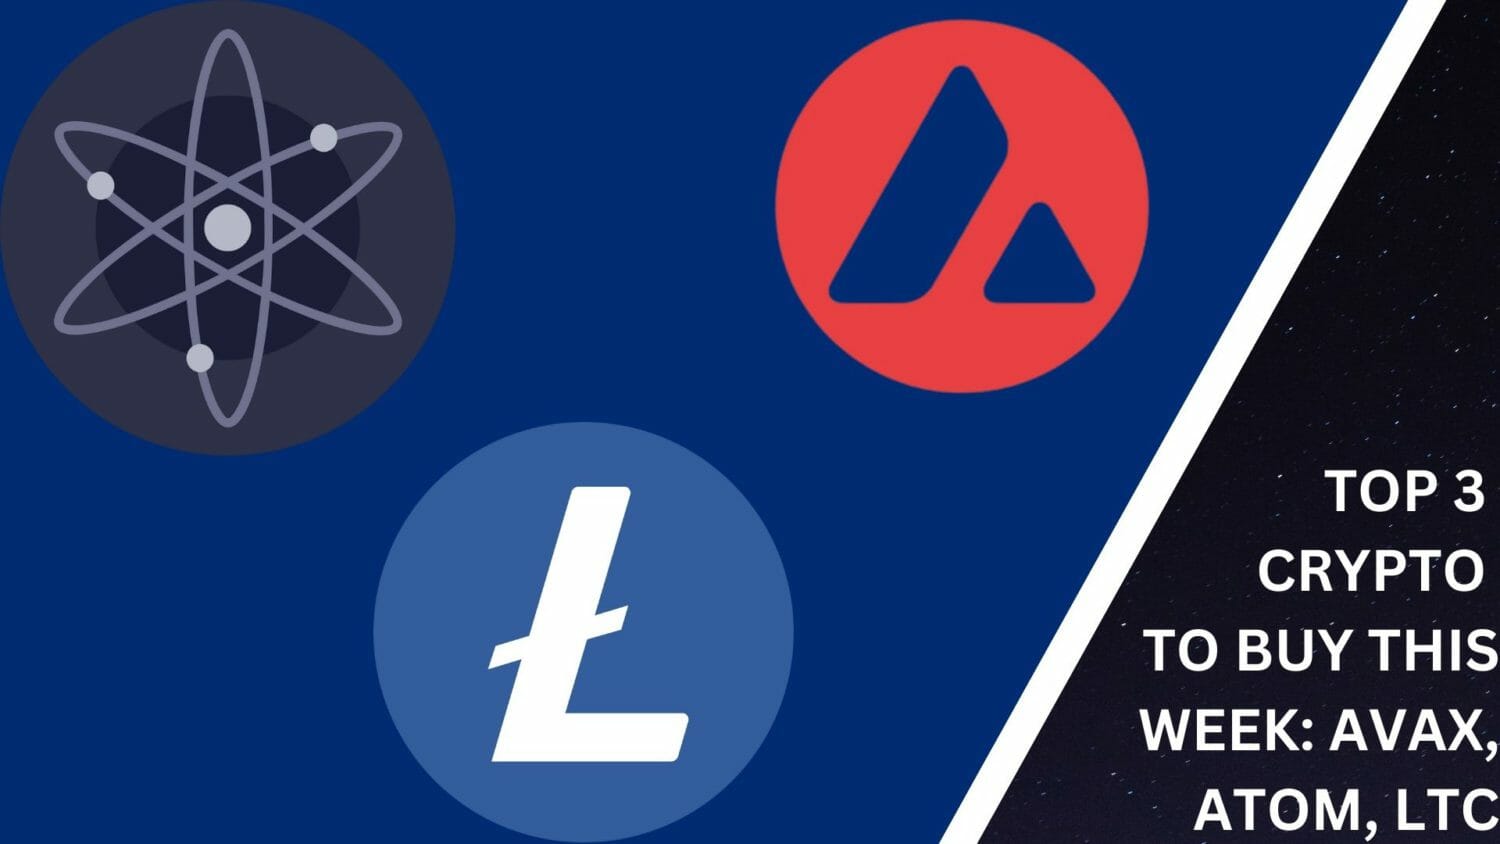 Top 3 Crypto To Buy This Week: Avax, Atom, Ltc